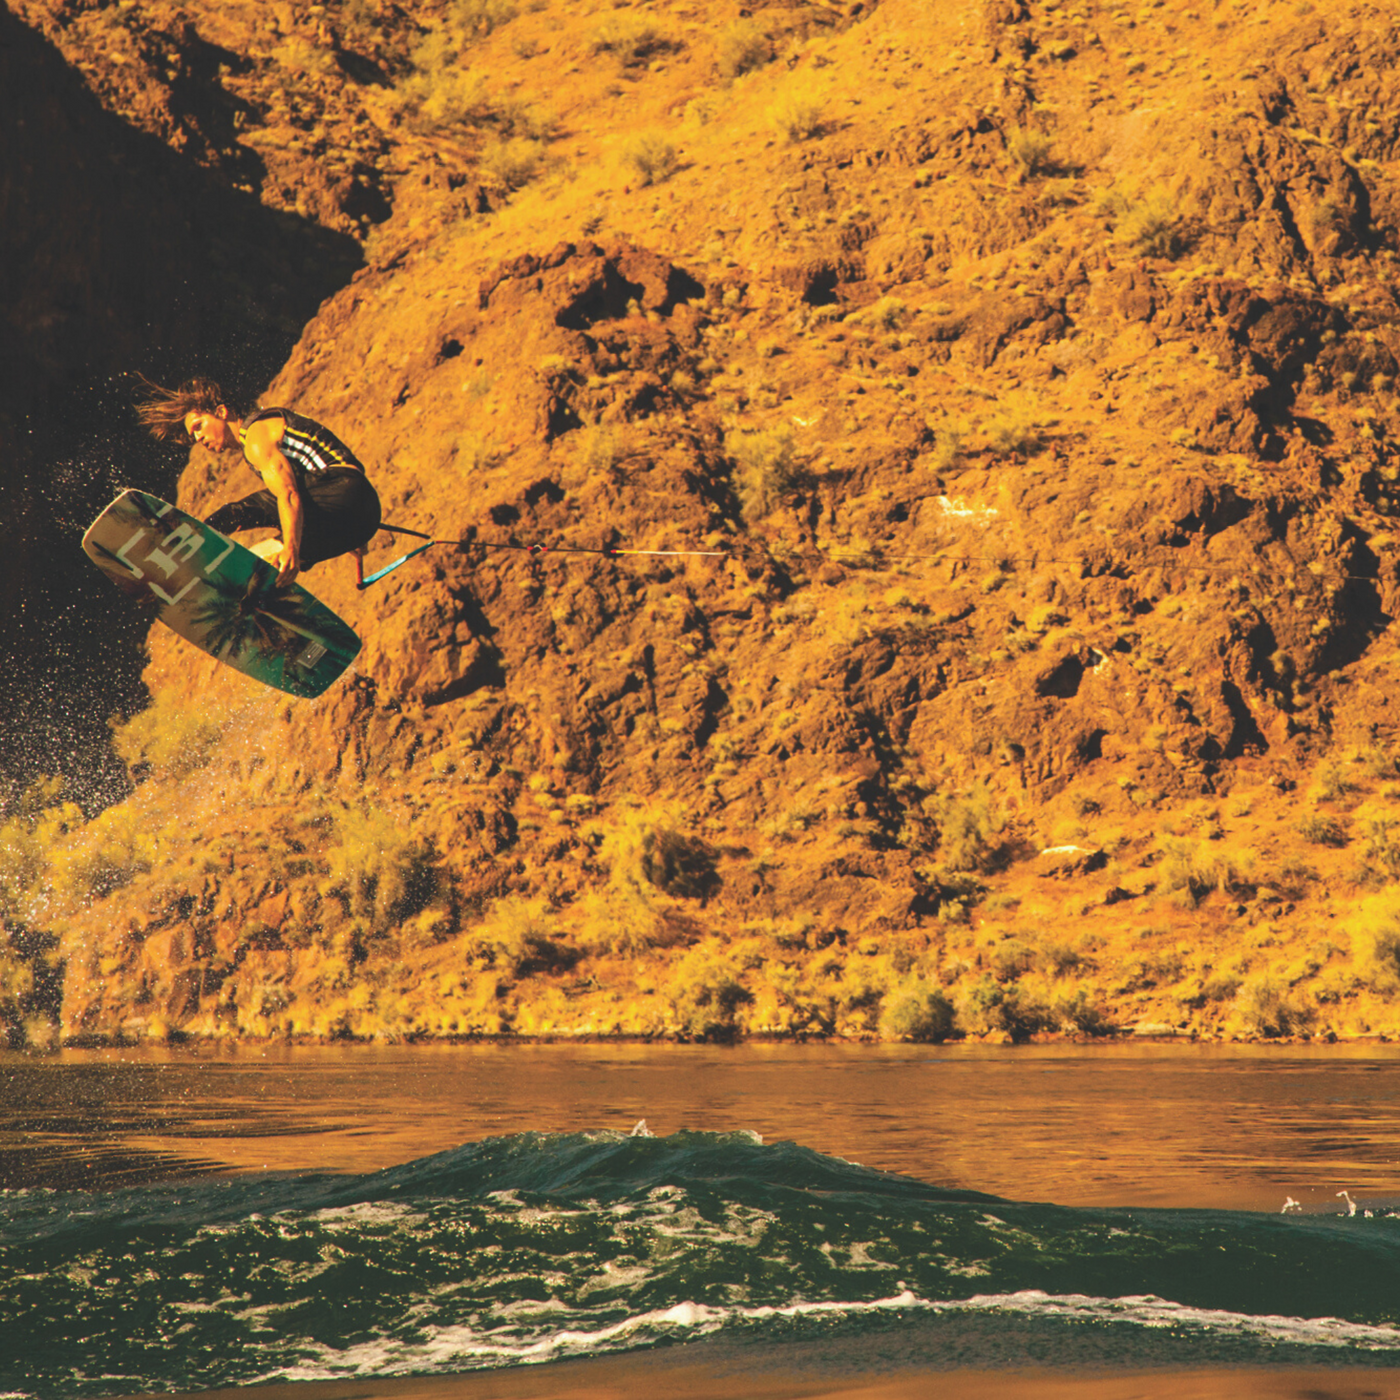 Aaron Rathy wakeboarding doing a big air grab